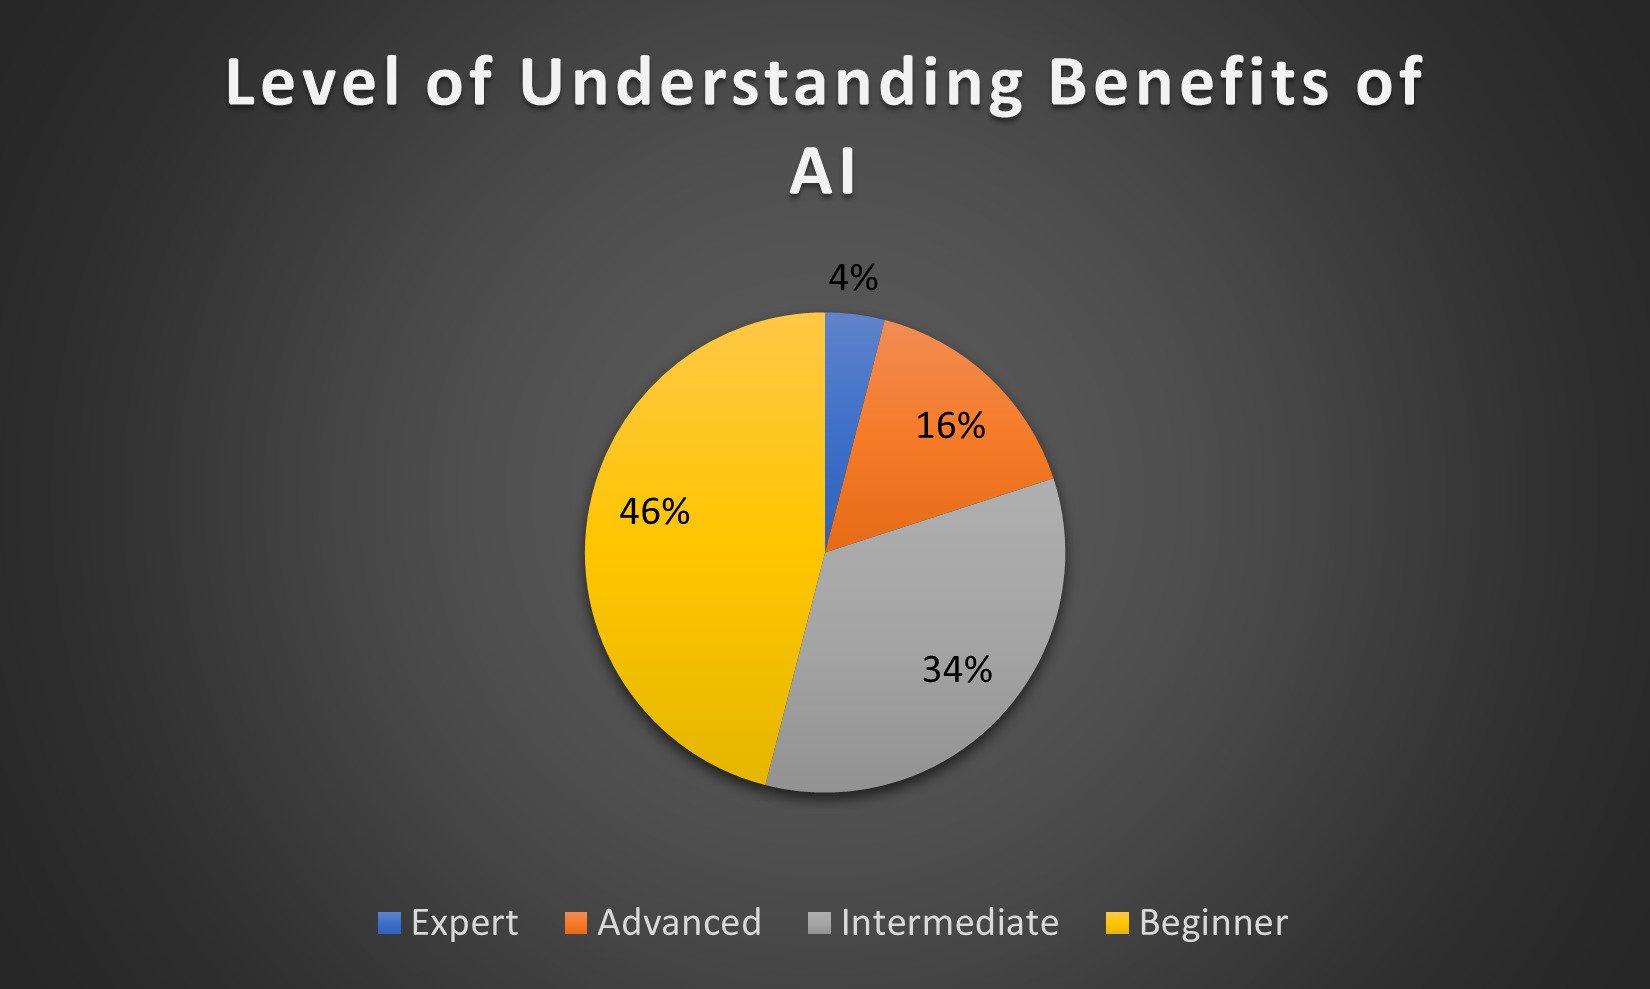 Level of understanding benefits of AI